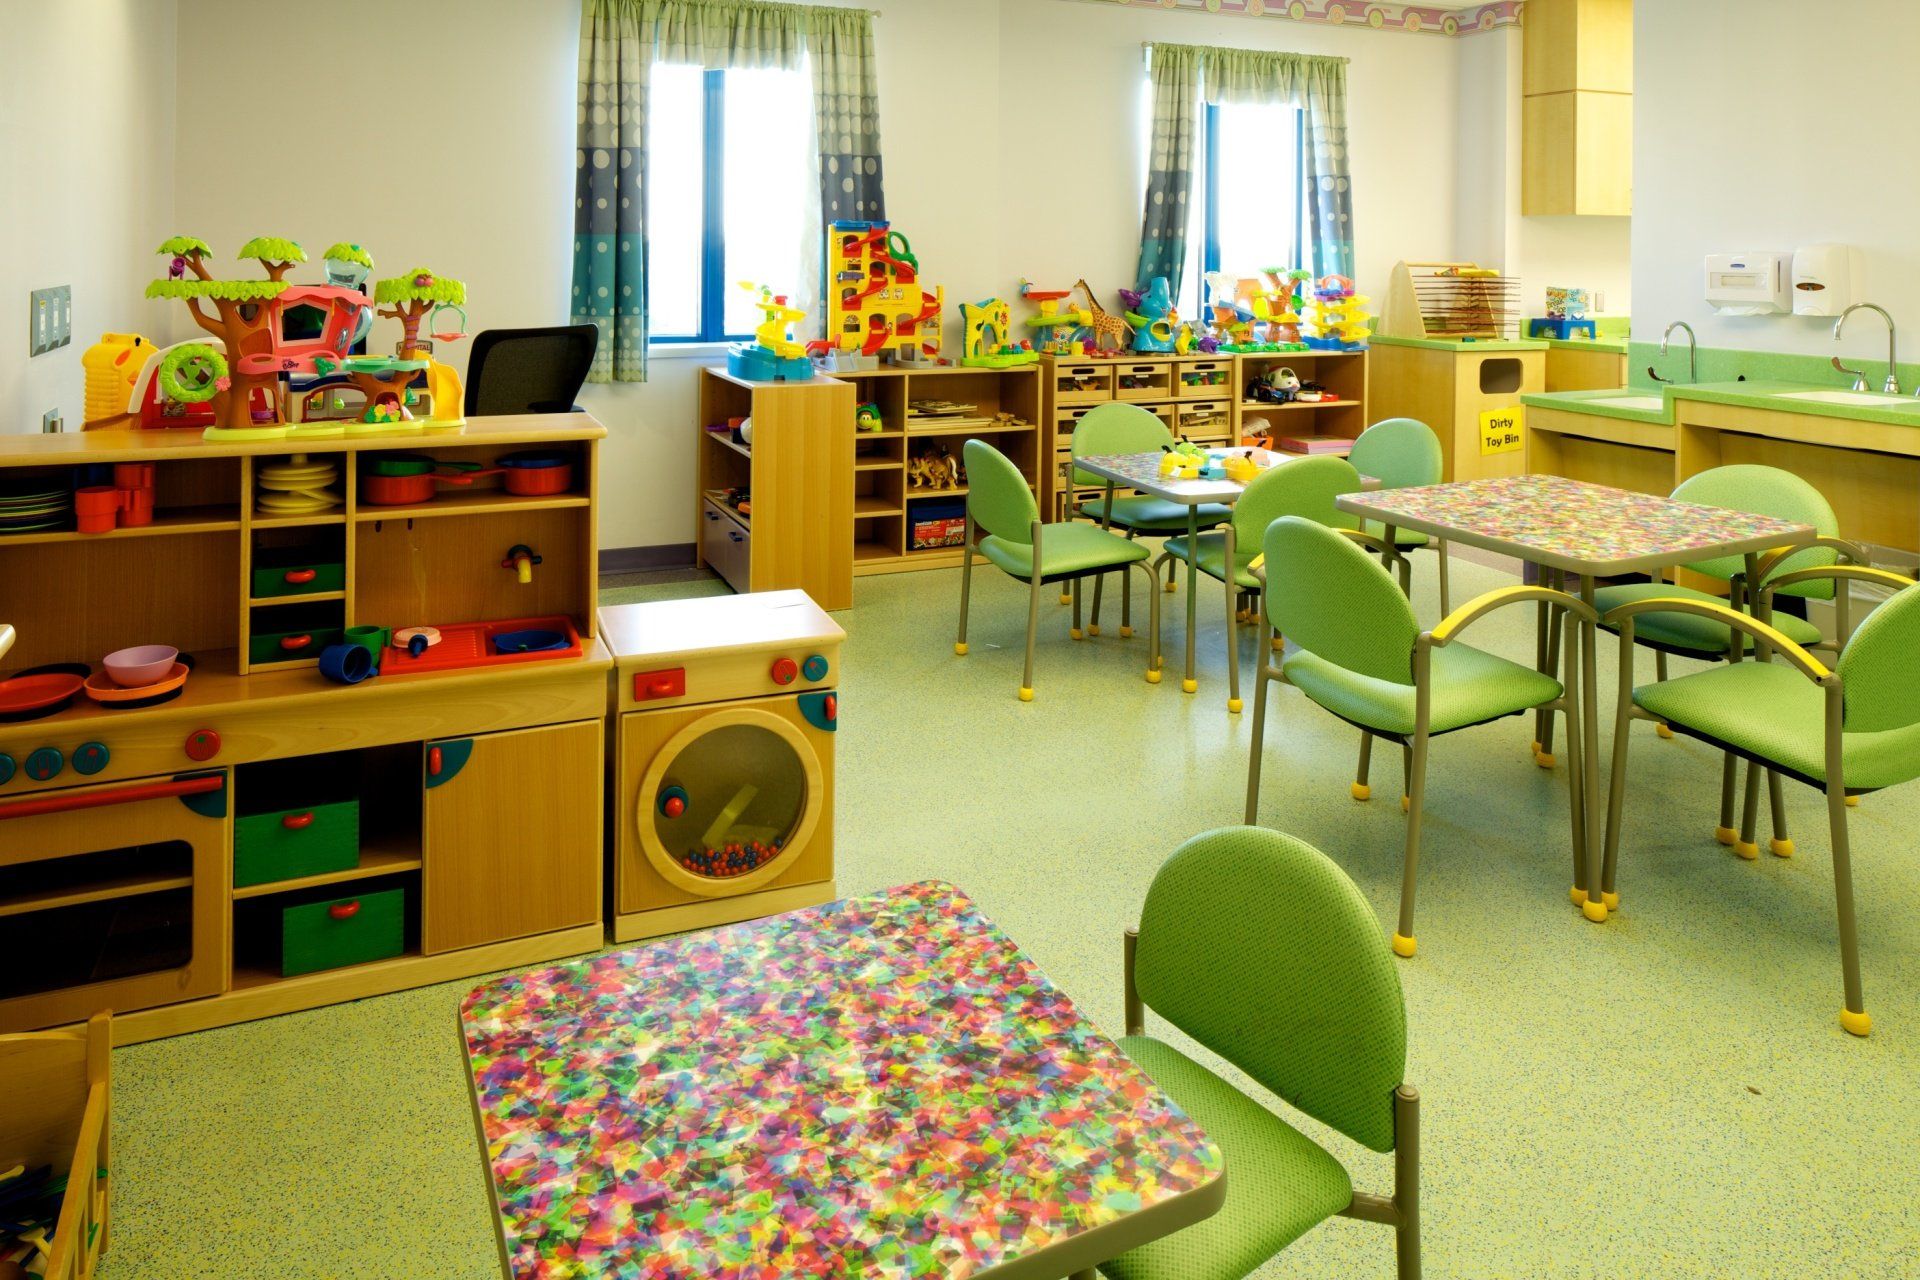 Children's hospital area